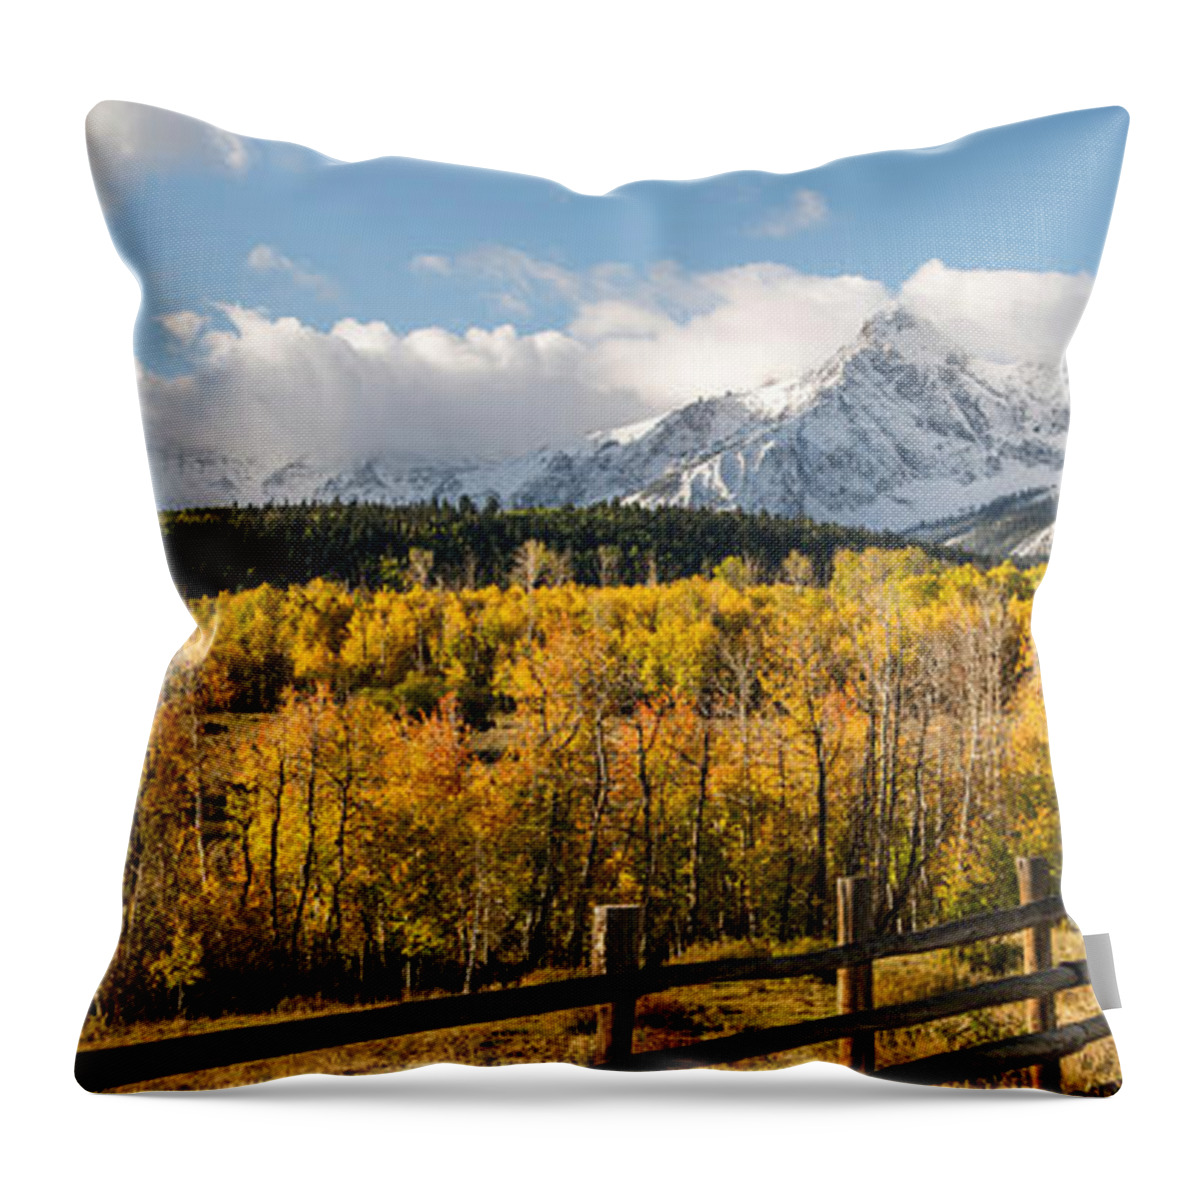 Colorado Throw Pillow featuring the photograph Colorado Gold Panorama by Aaron Spong